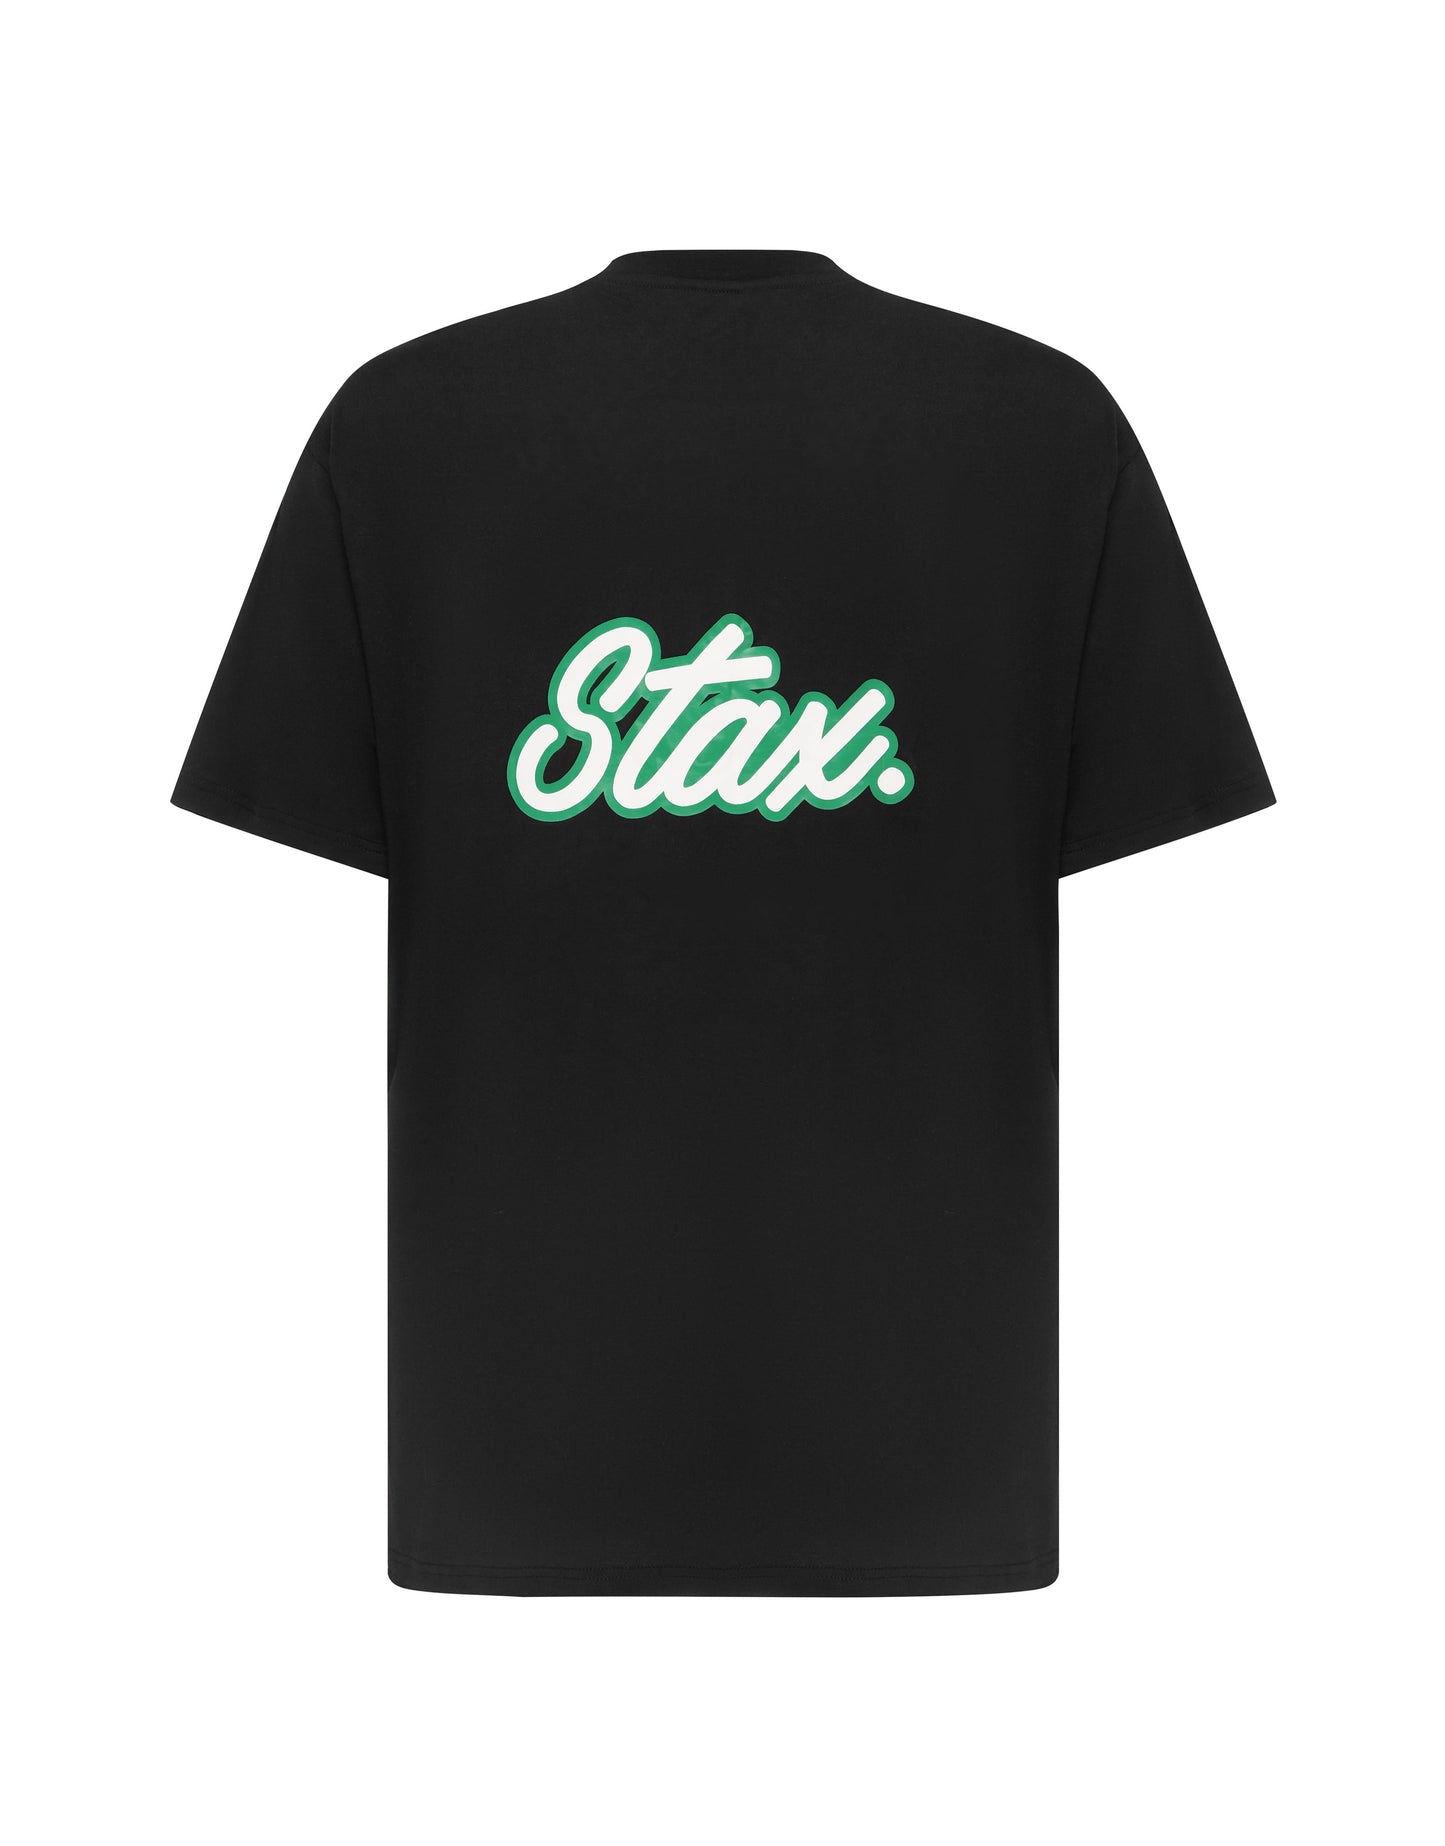 STAX. Court Drip Basketball Tee - Black & Green